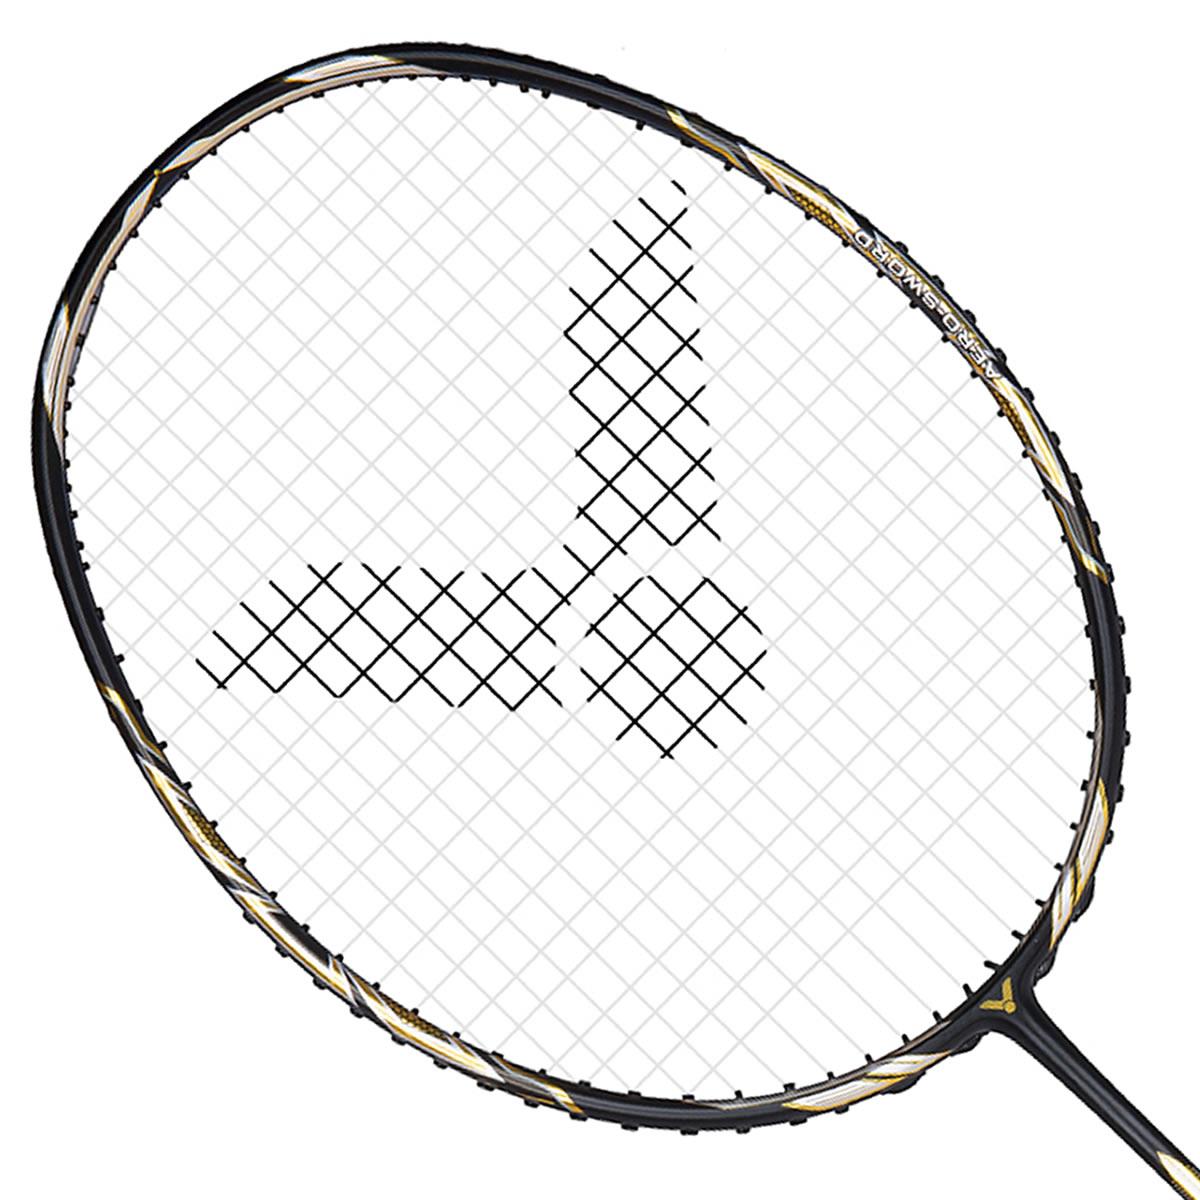 Victor Jetspeed S10C Badminton Racket - Black Gold